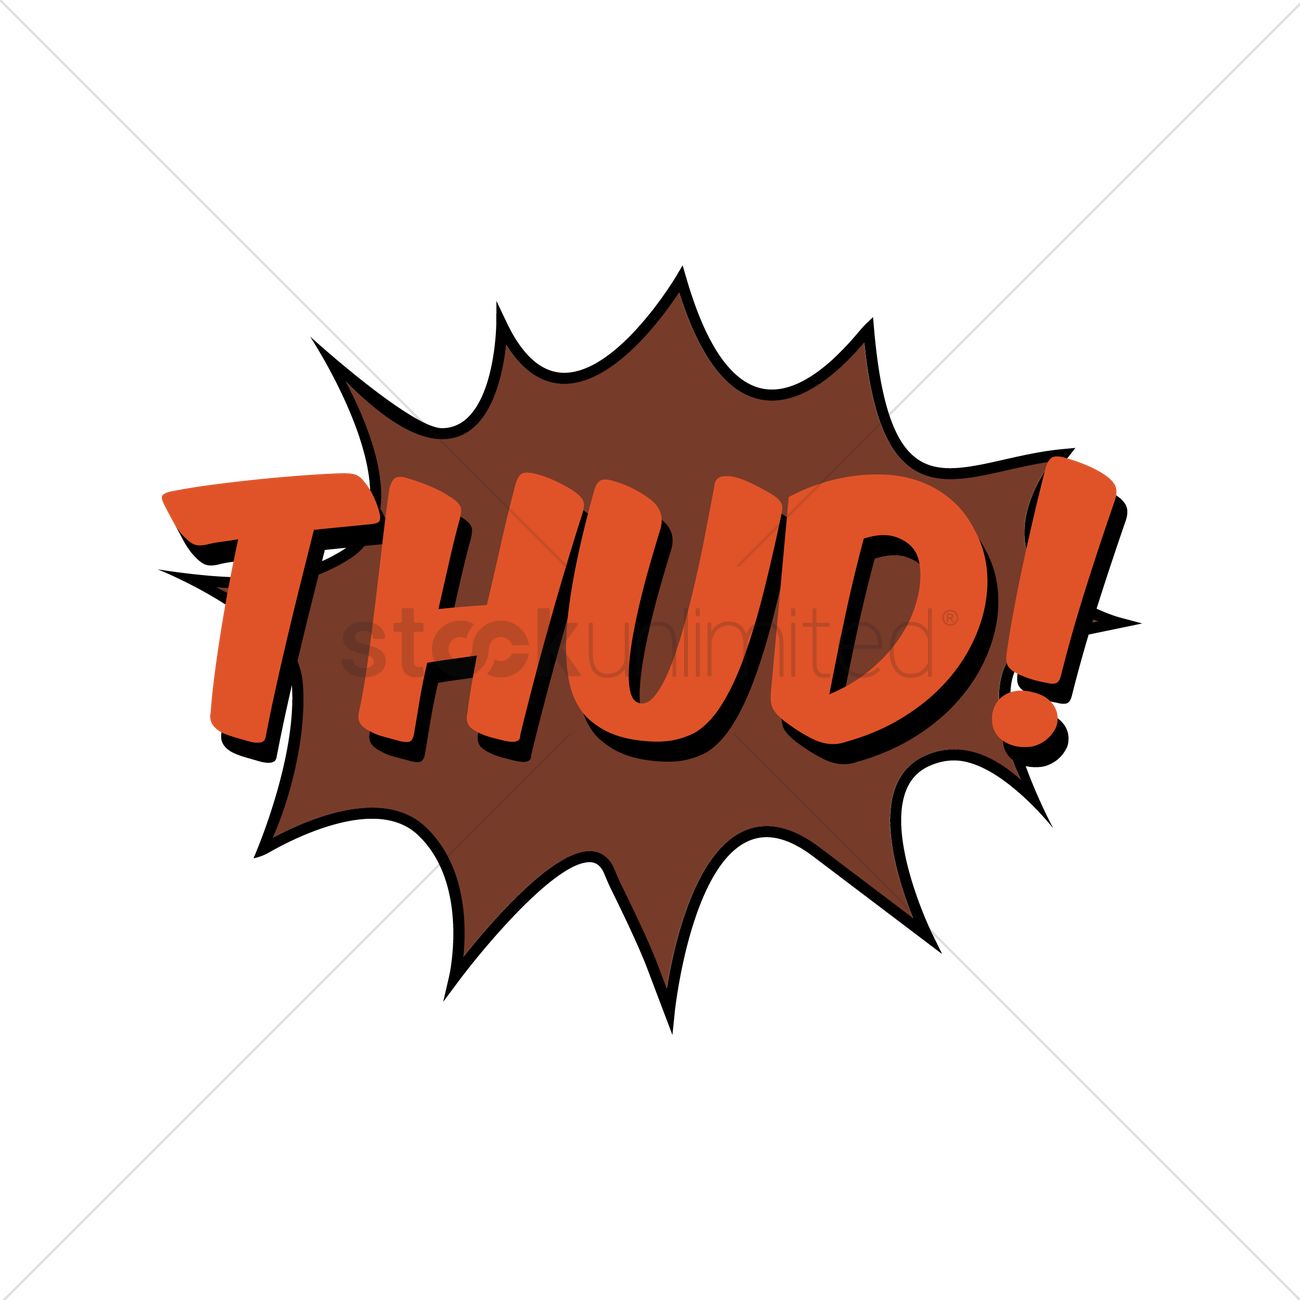 Thud! HD wallpapers, Desktop wallpaper - most viewed